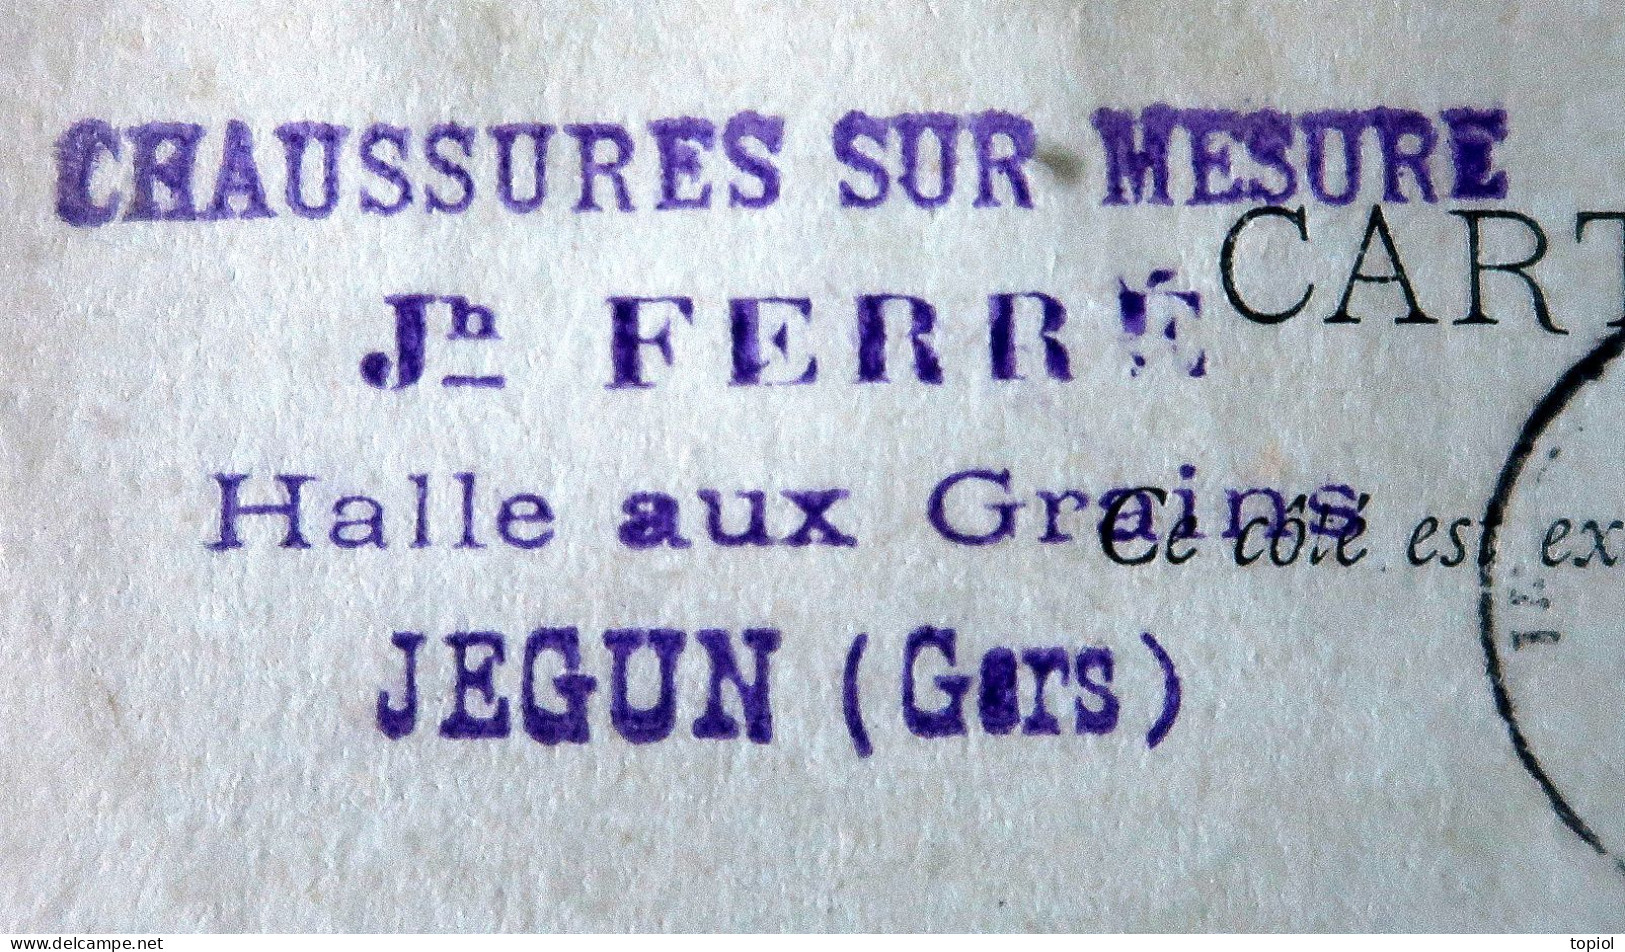 Carte Postale Entier 10c Type Sage - Repiquage "Jh.FERRE Jégun (Gers)" 1897 - Postales Tipos Y (antes De 1995)